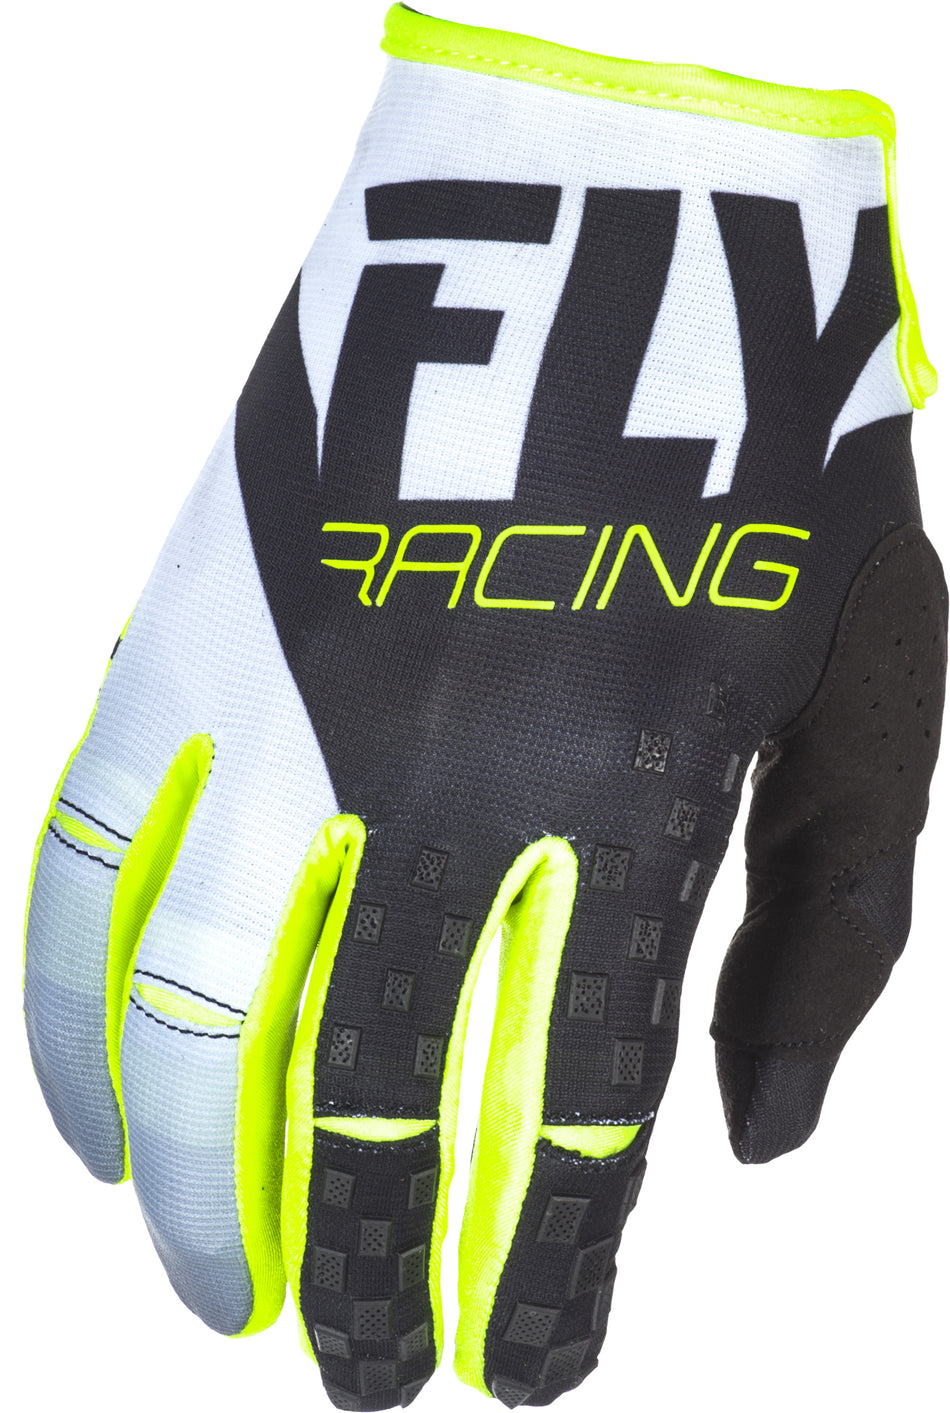 FLY RACING Kinetic Gloves Black/White/Hi-Vis Sz 13 371-41613